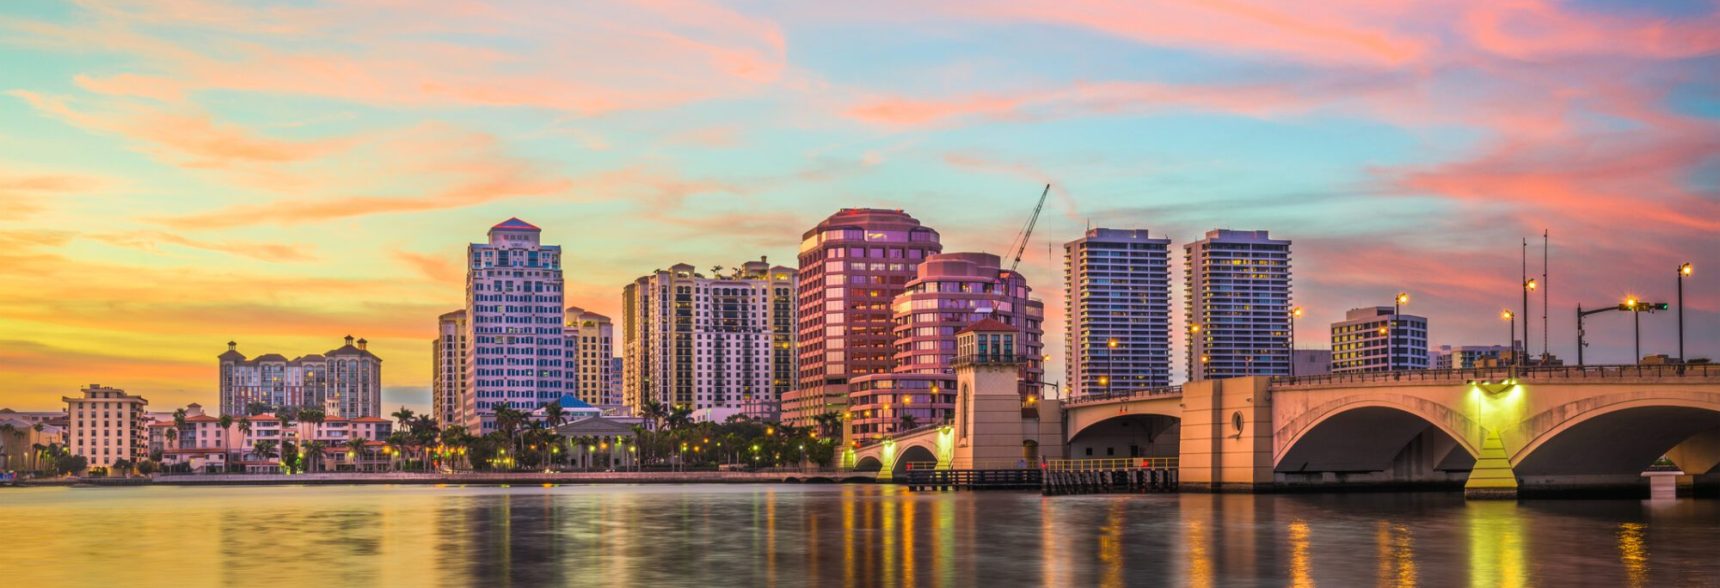 West Palm Beach, Florida, USA downtown skyline.